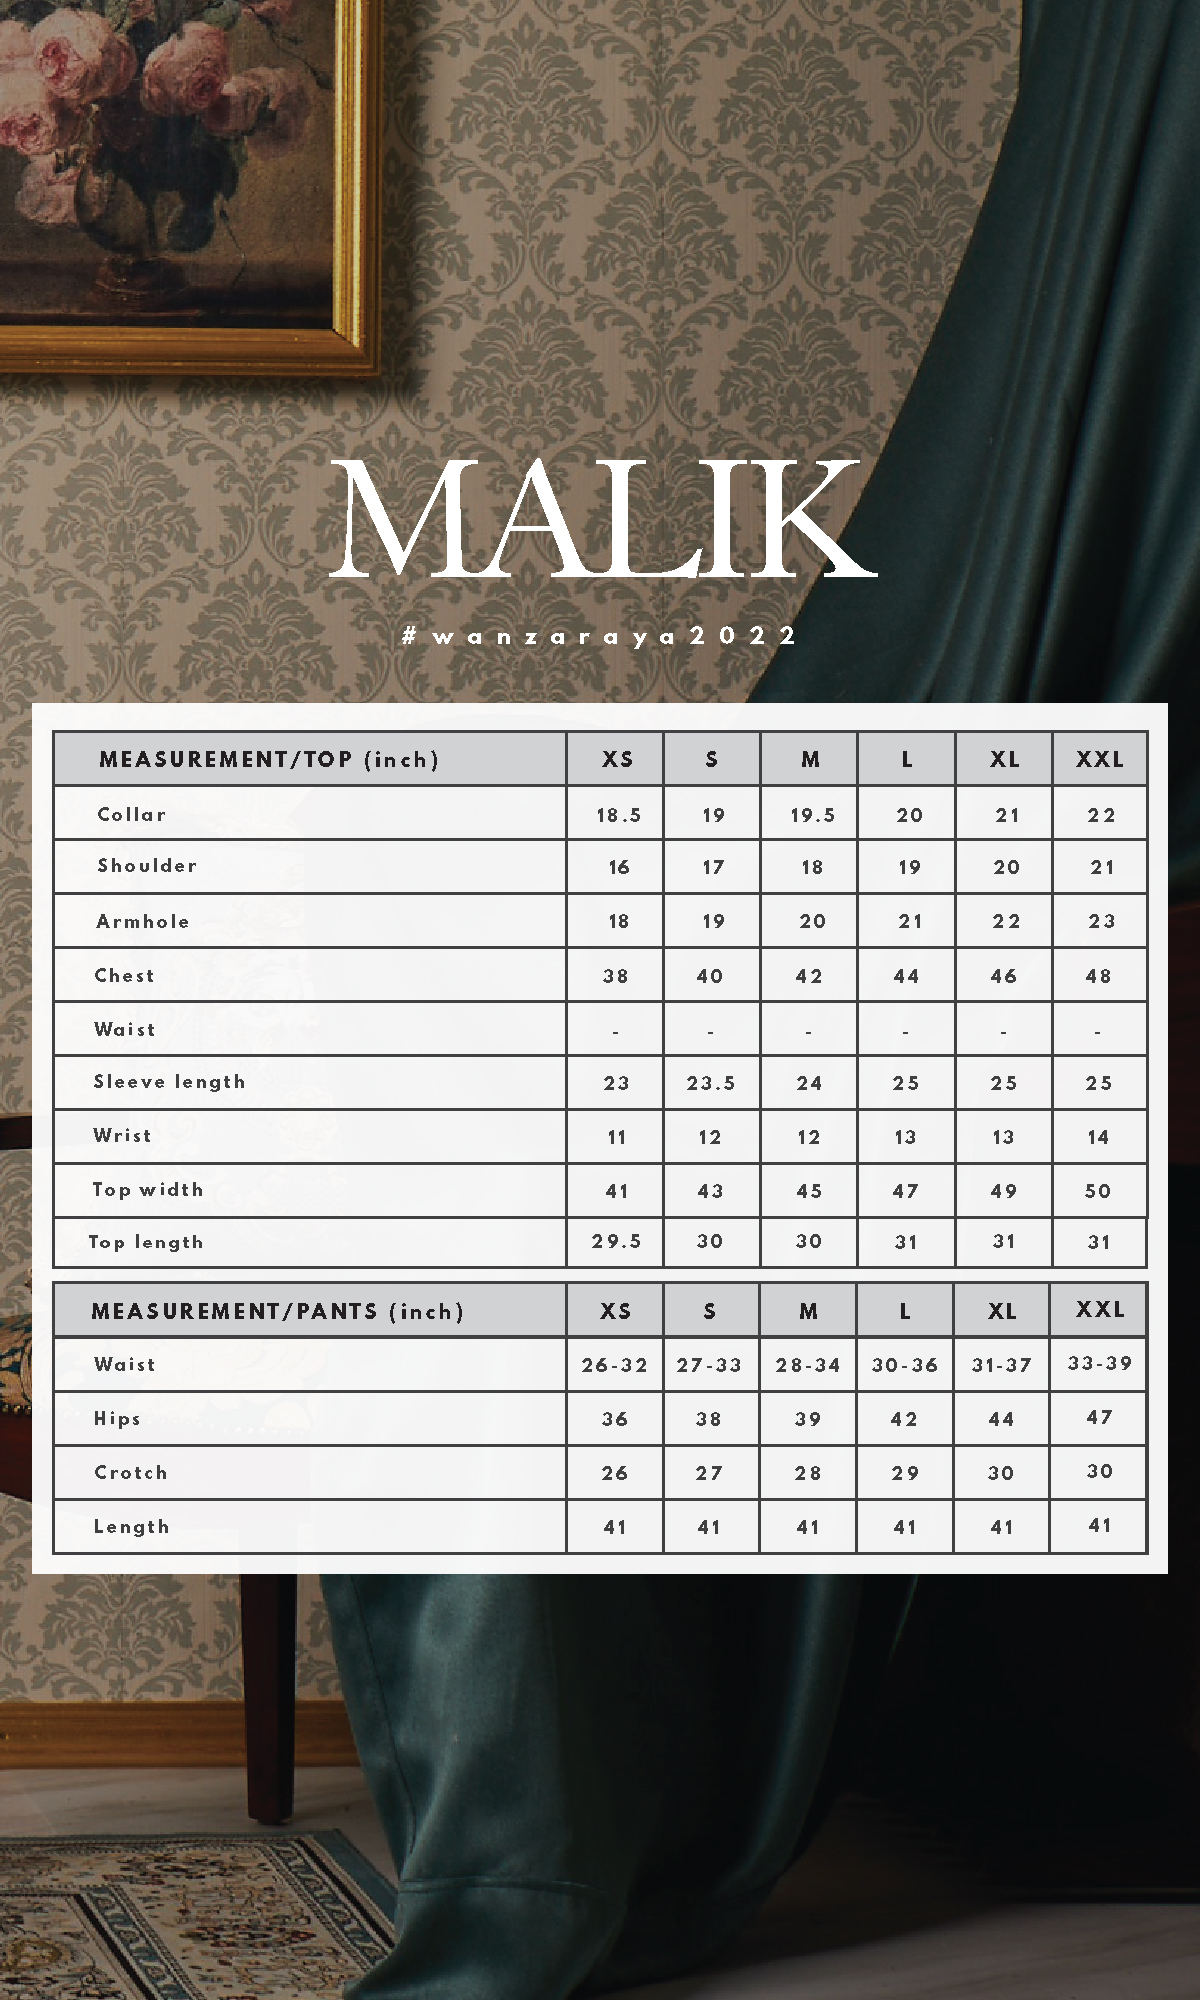 Malik Baju Melayu in British Tan